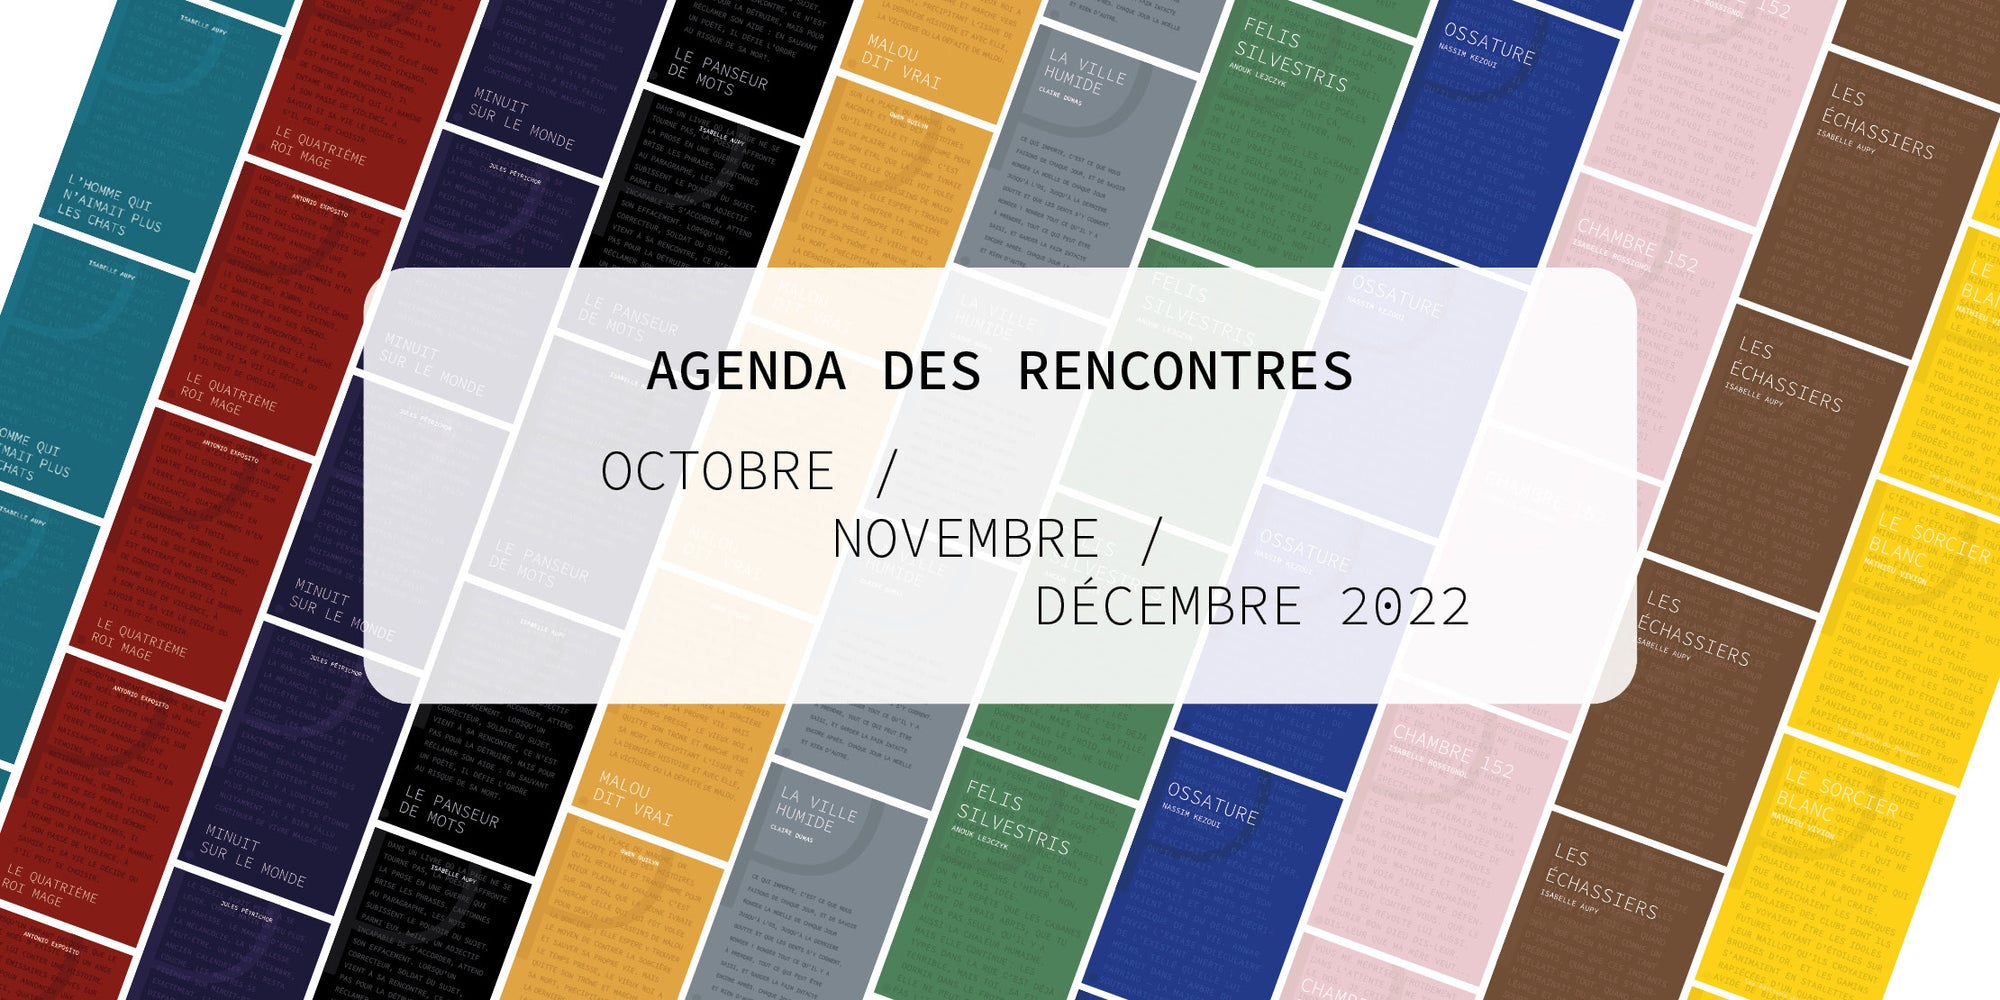 // Agenda des rencontres / Oct. Nov. Déc. 2022 //